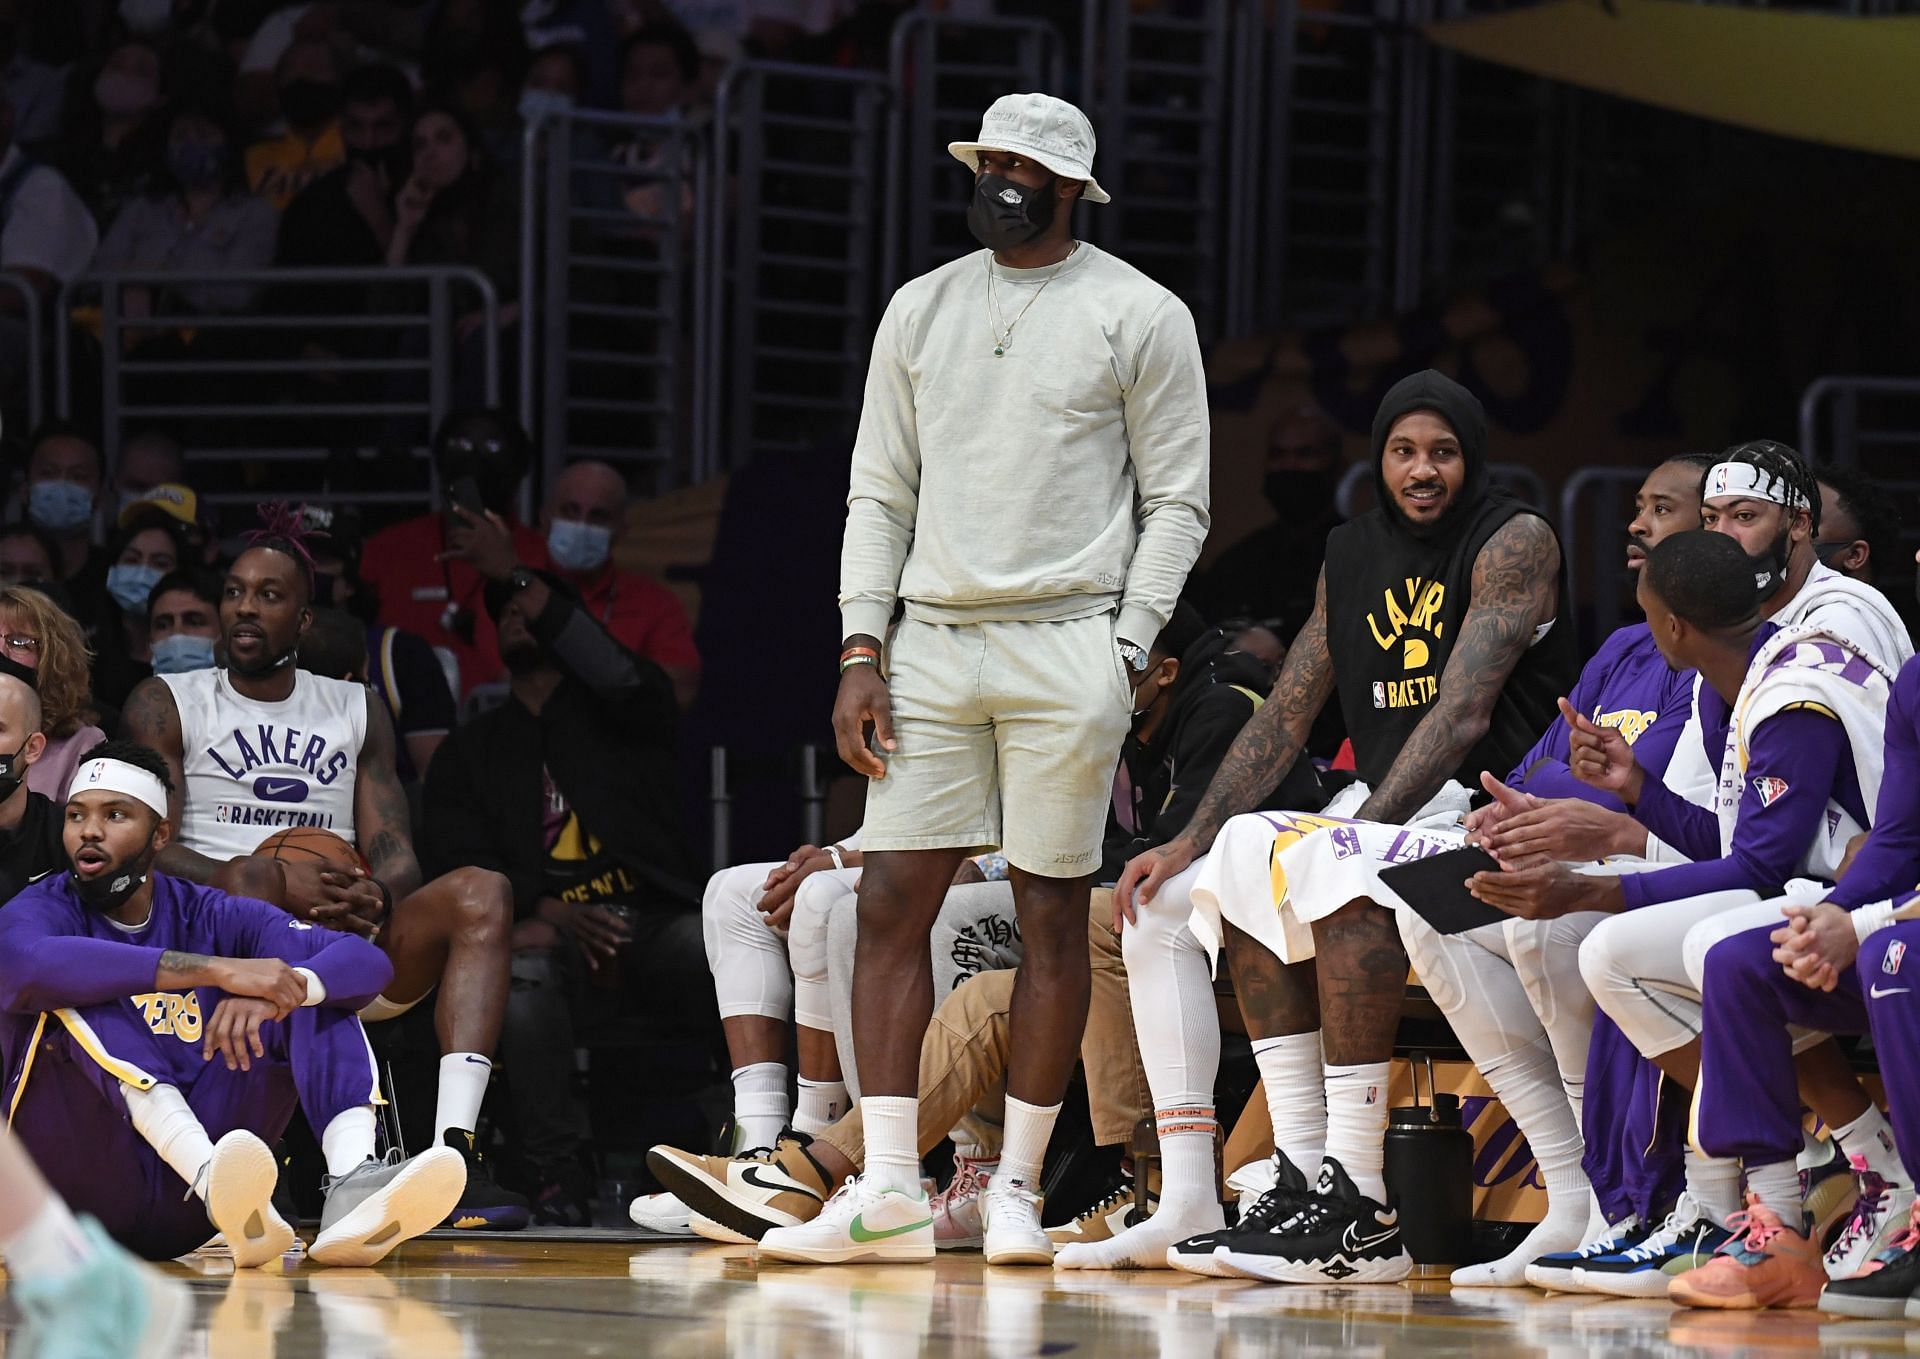 Lakers' LeBron James Has 'Slimmed Up' Ahead of 2021-22 Season, per